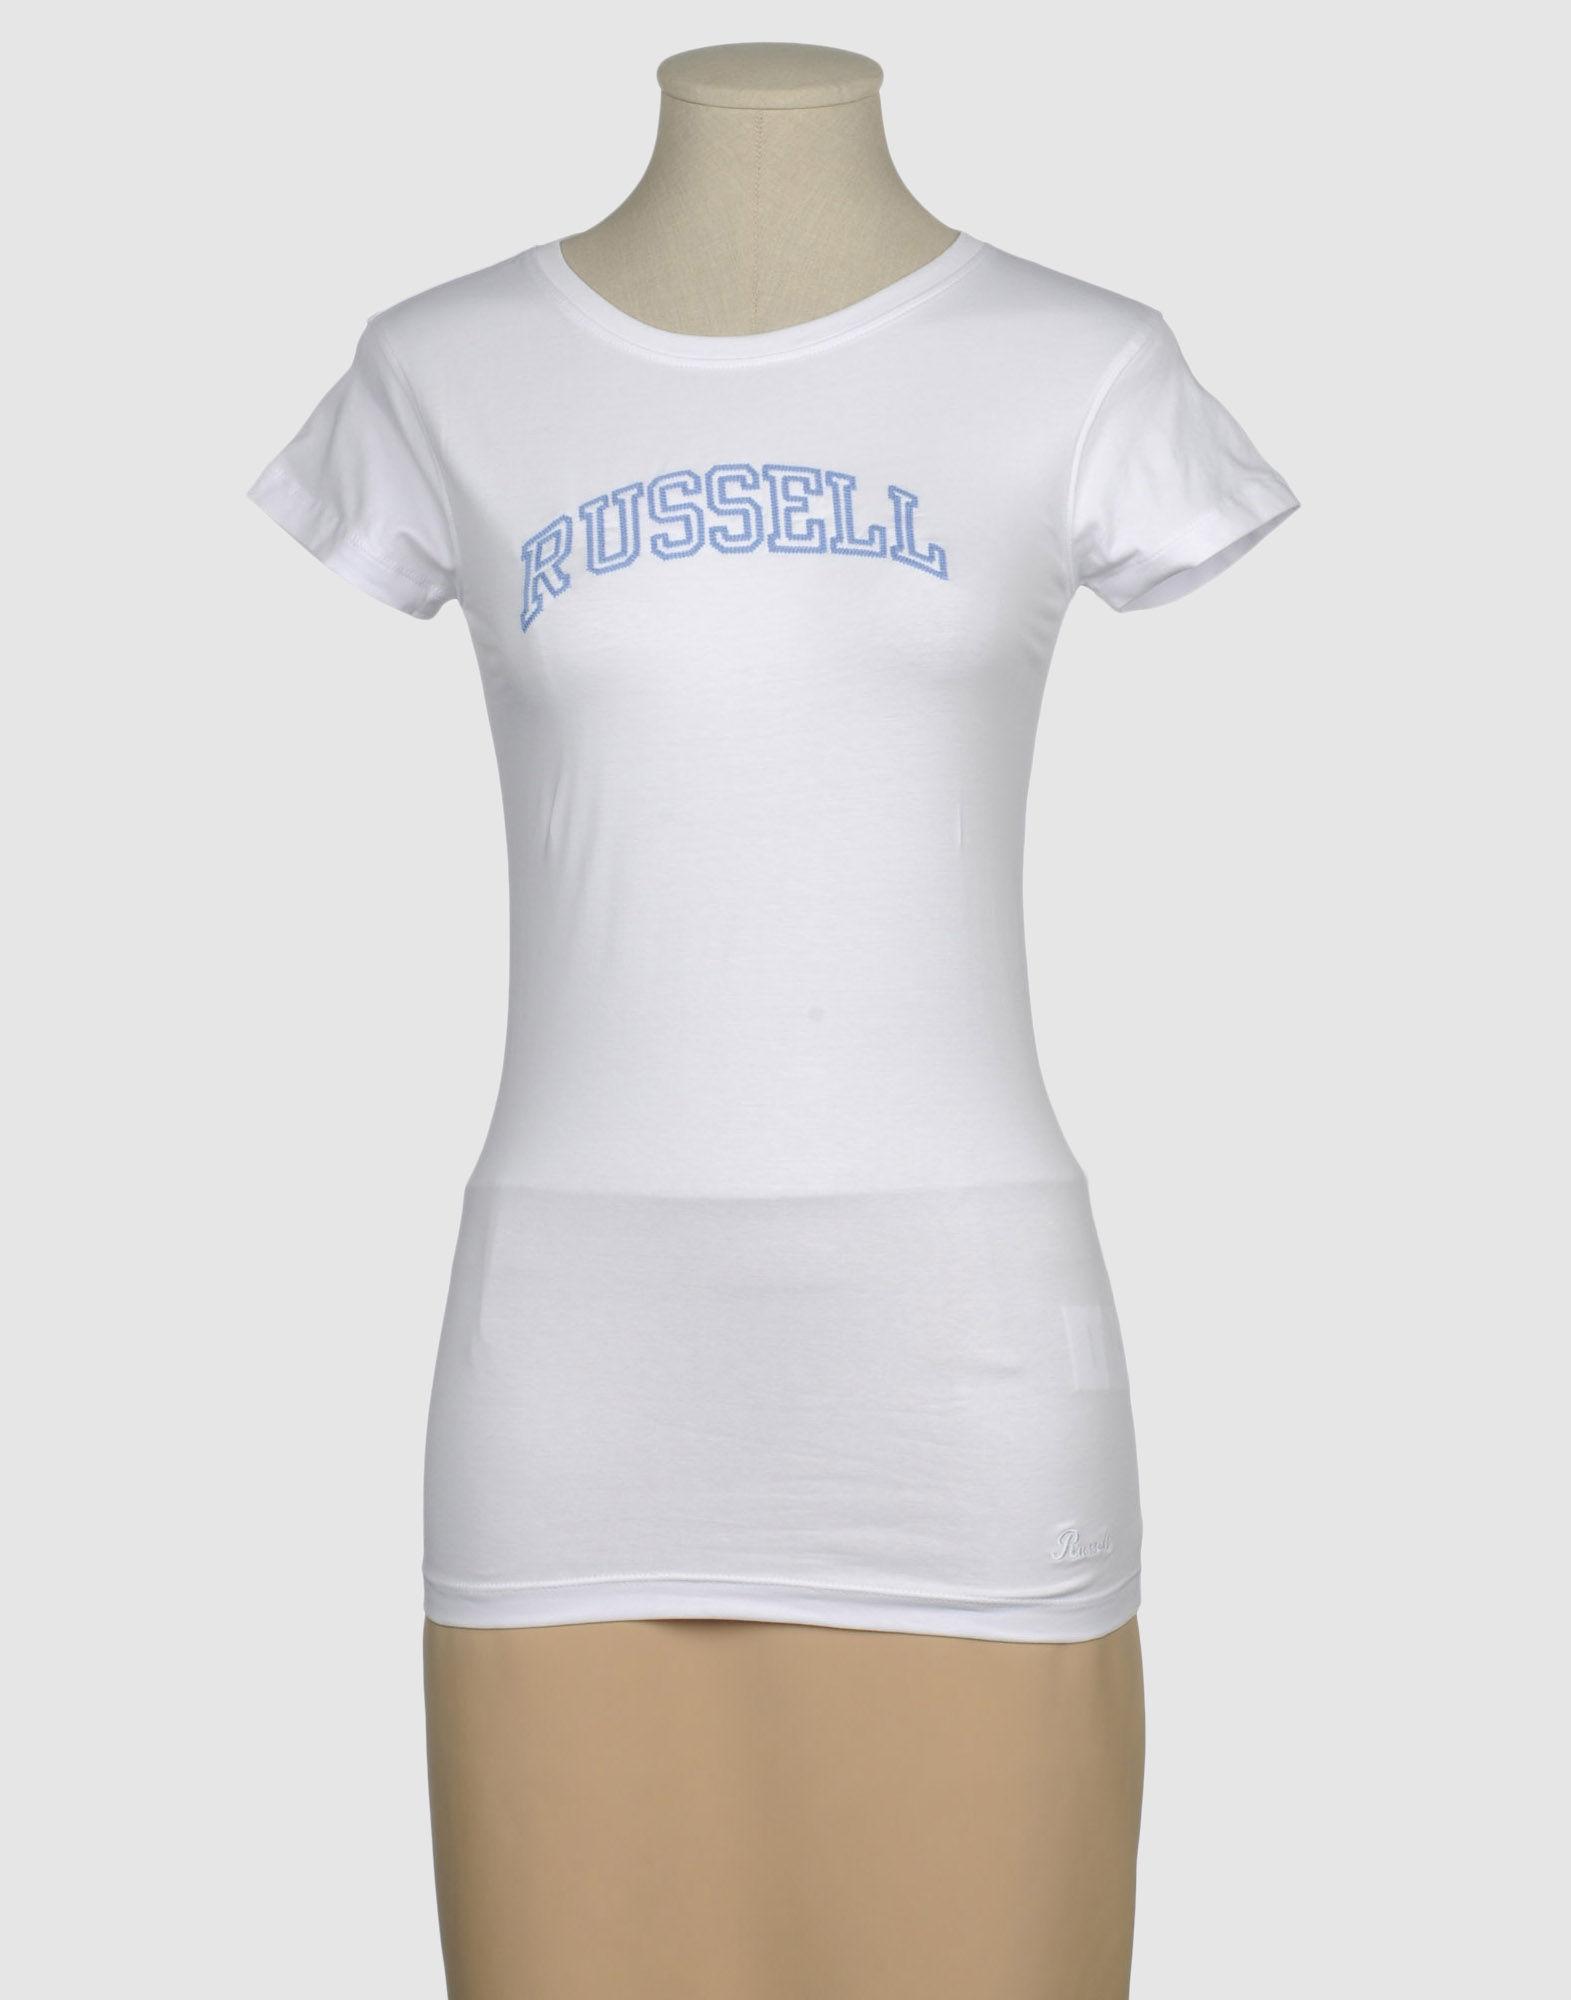 Foto Russell Athletic Camisetas De Manga Corta Mujer Blanco foto 732344